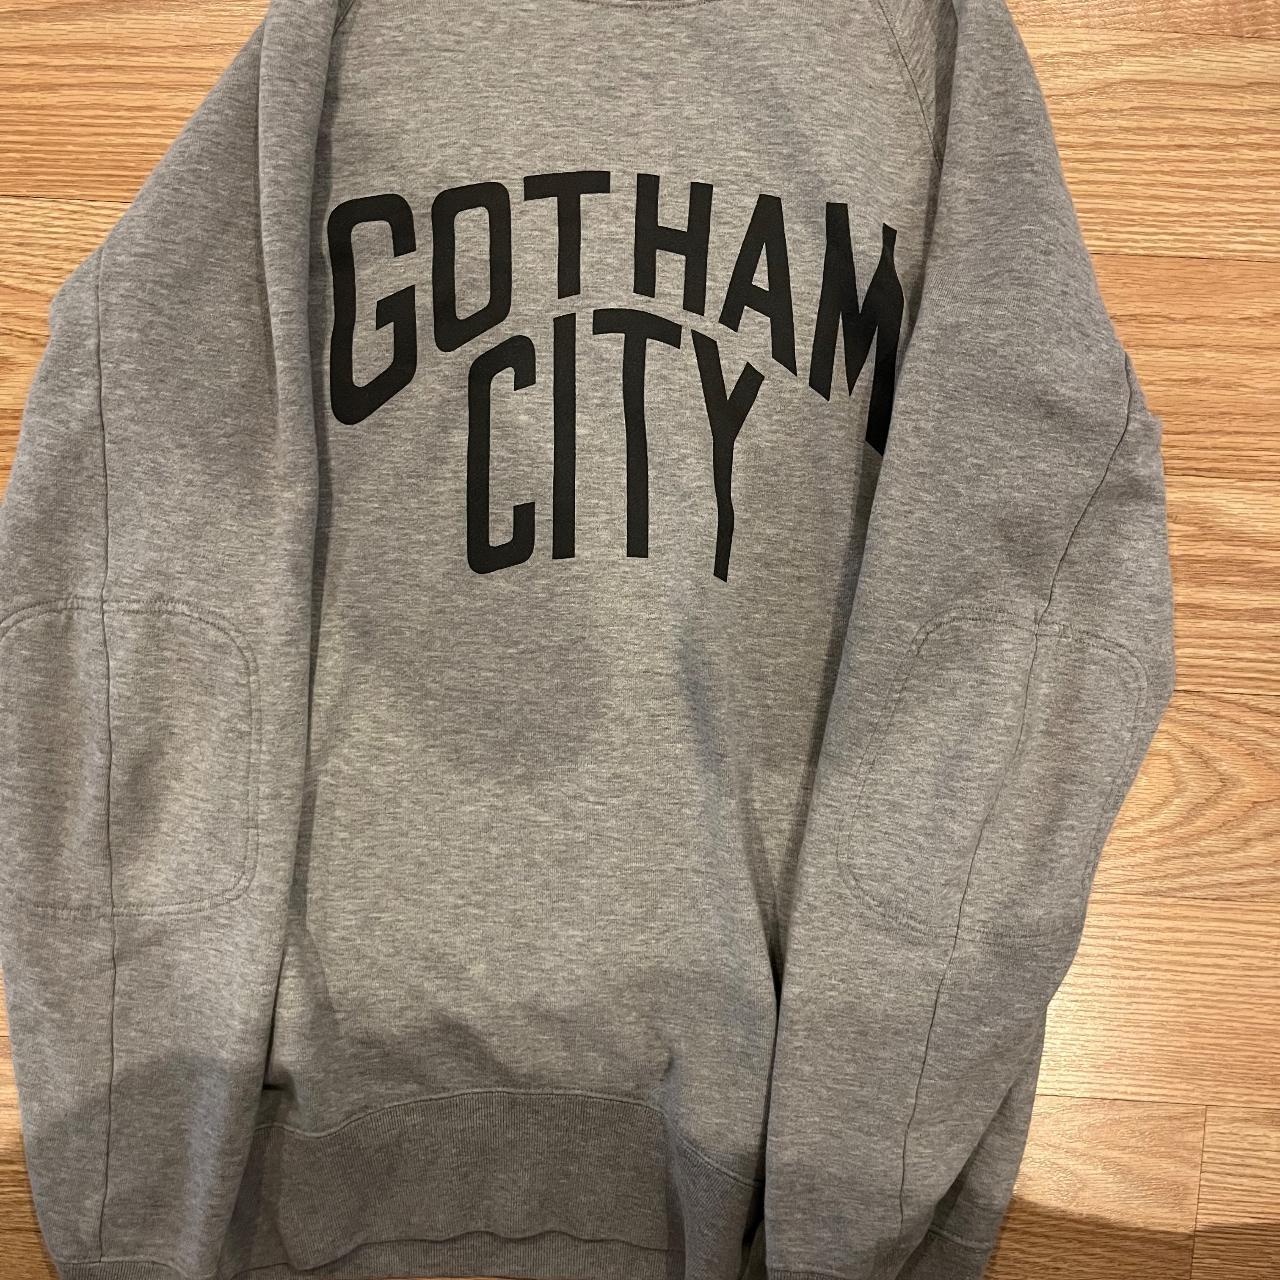 Gotham City Number Nine Grey Sweatshirt size 2 fits... - Depop